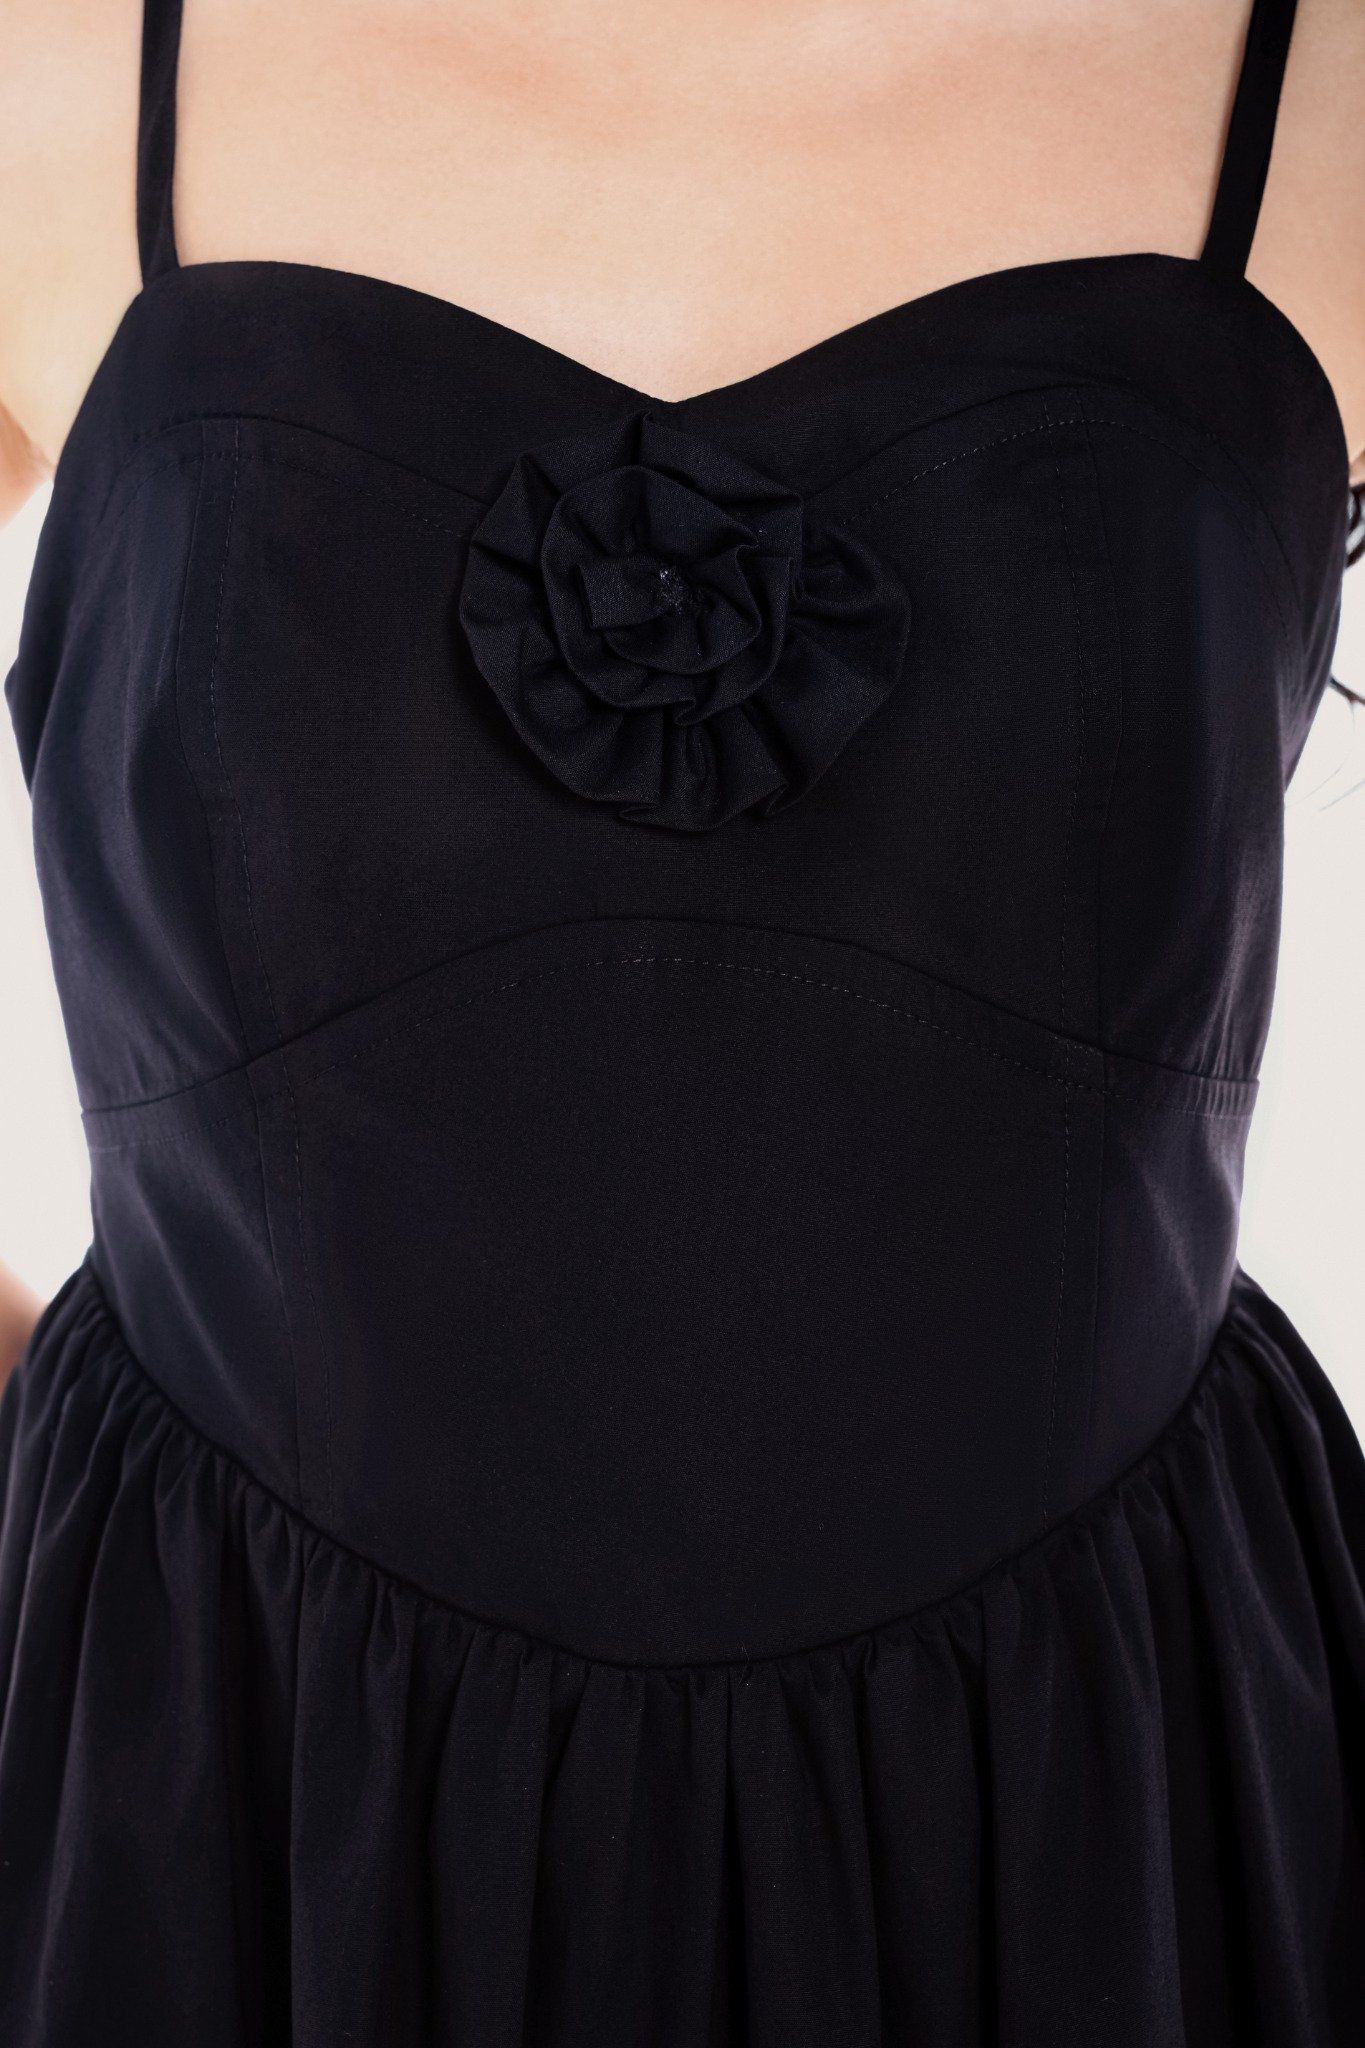  Black Floral Embellished Bubble Mini Dress 